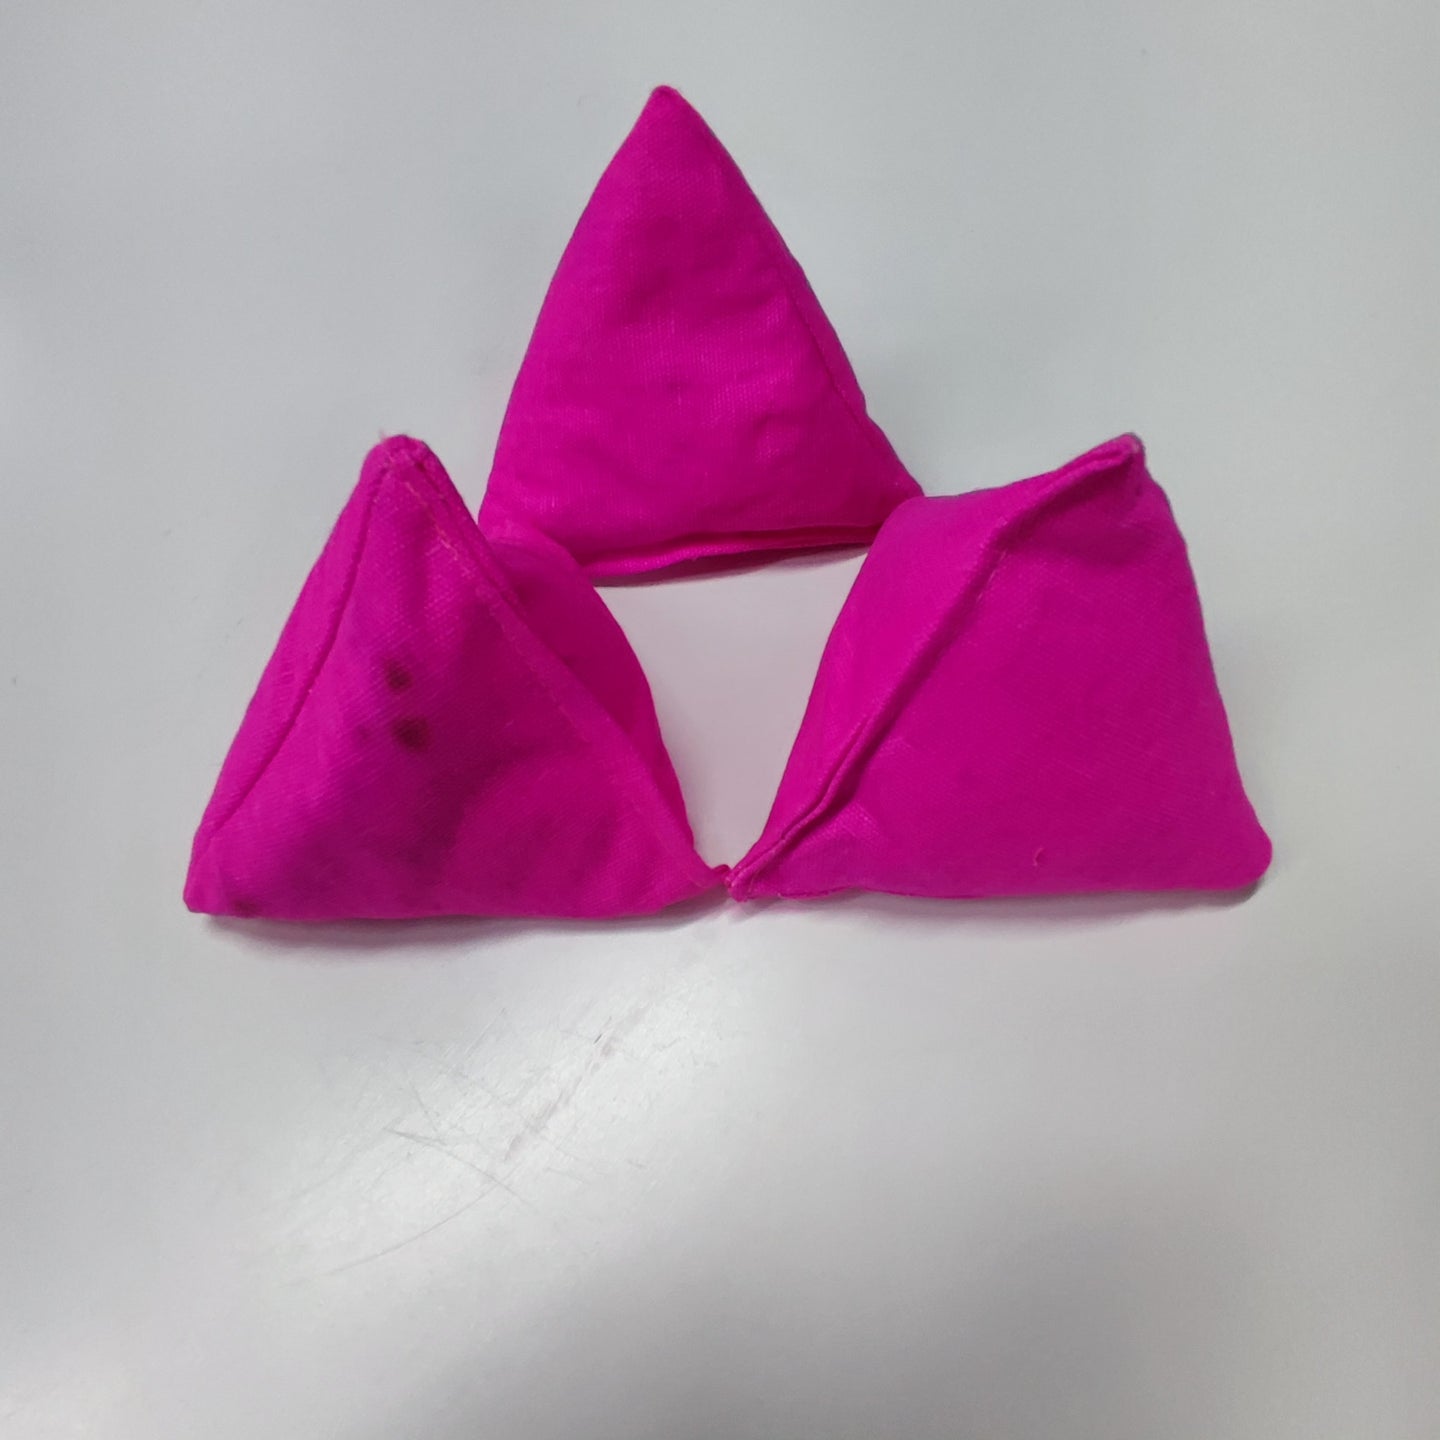  Juggle Dream Tri-it Pyramid Bean Bag -PINK-  Bargain Basement - RRP £1.30 